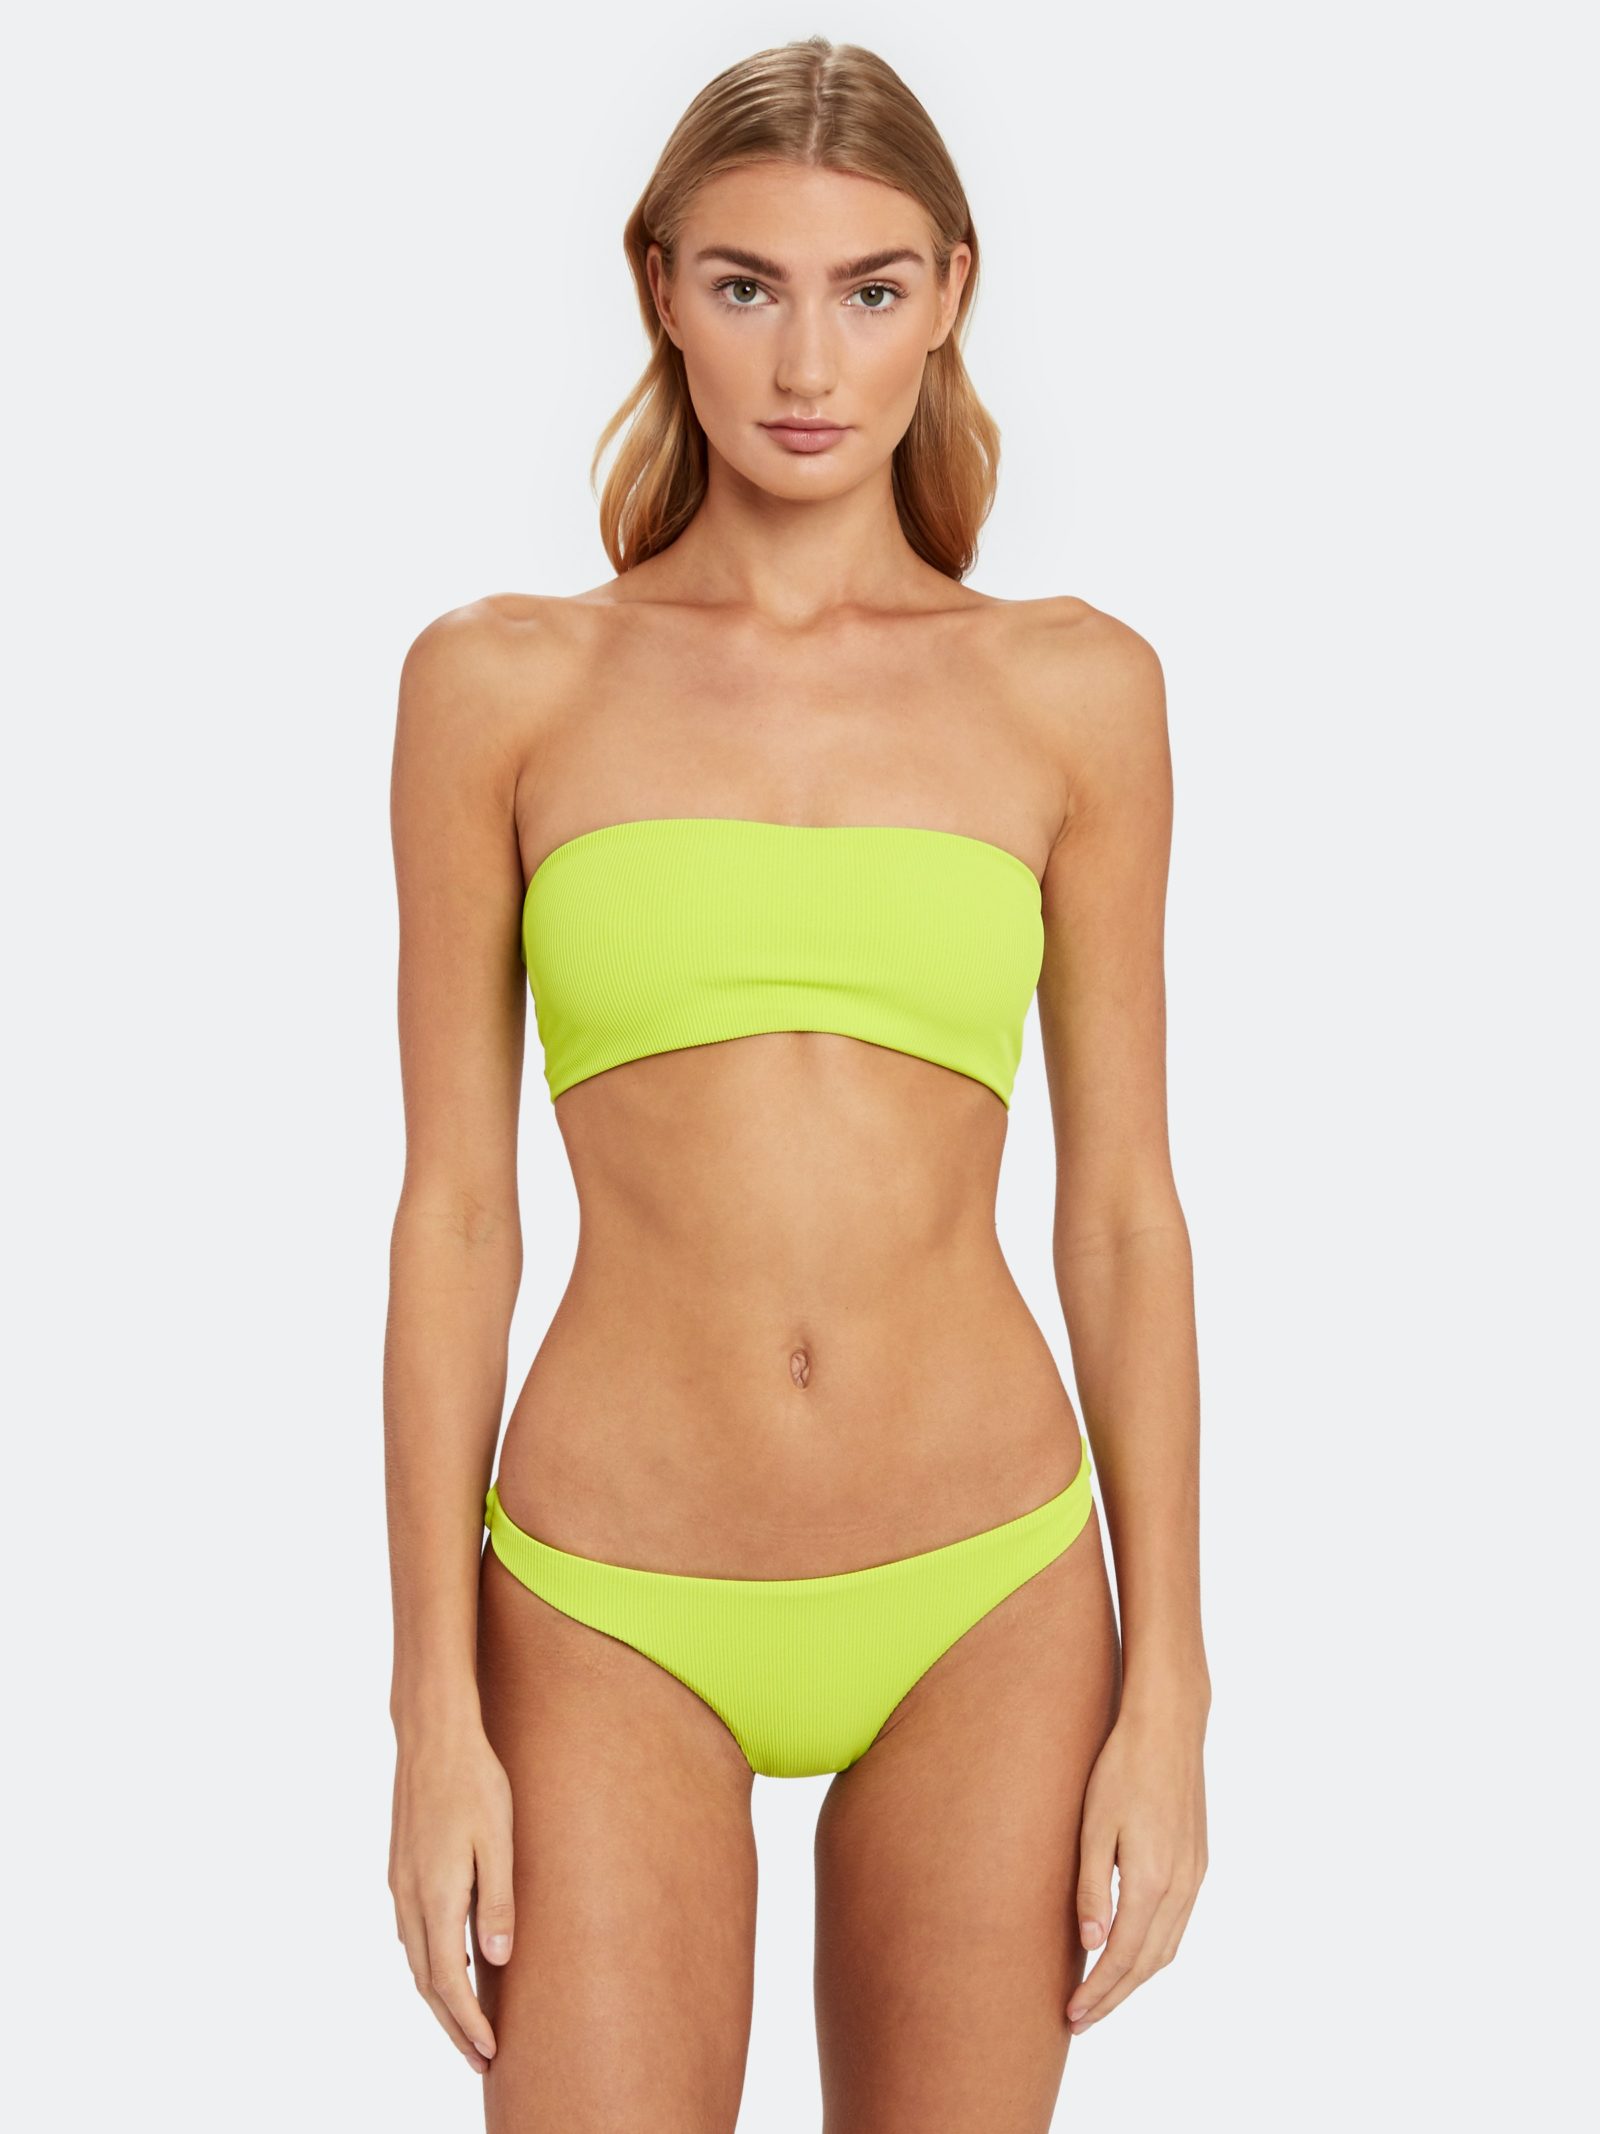 Verishop's Up To 80% Off Sale bikini top